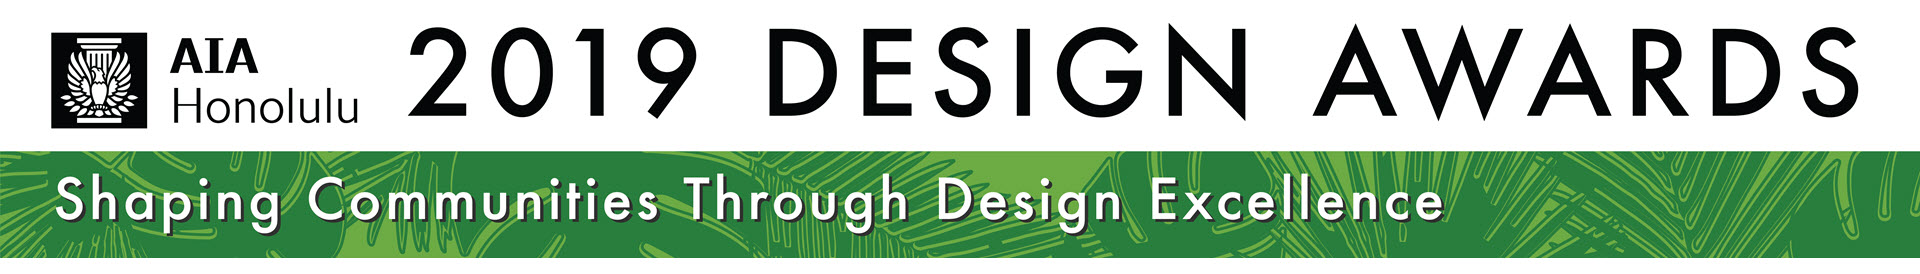 2019 AIA Honolulu Design Awards Event Banner